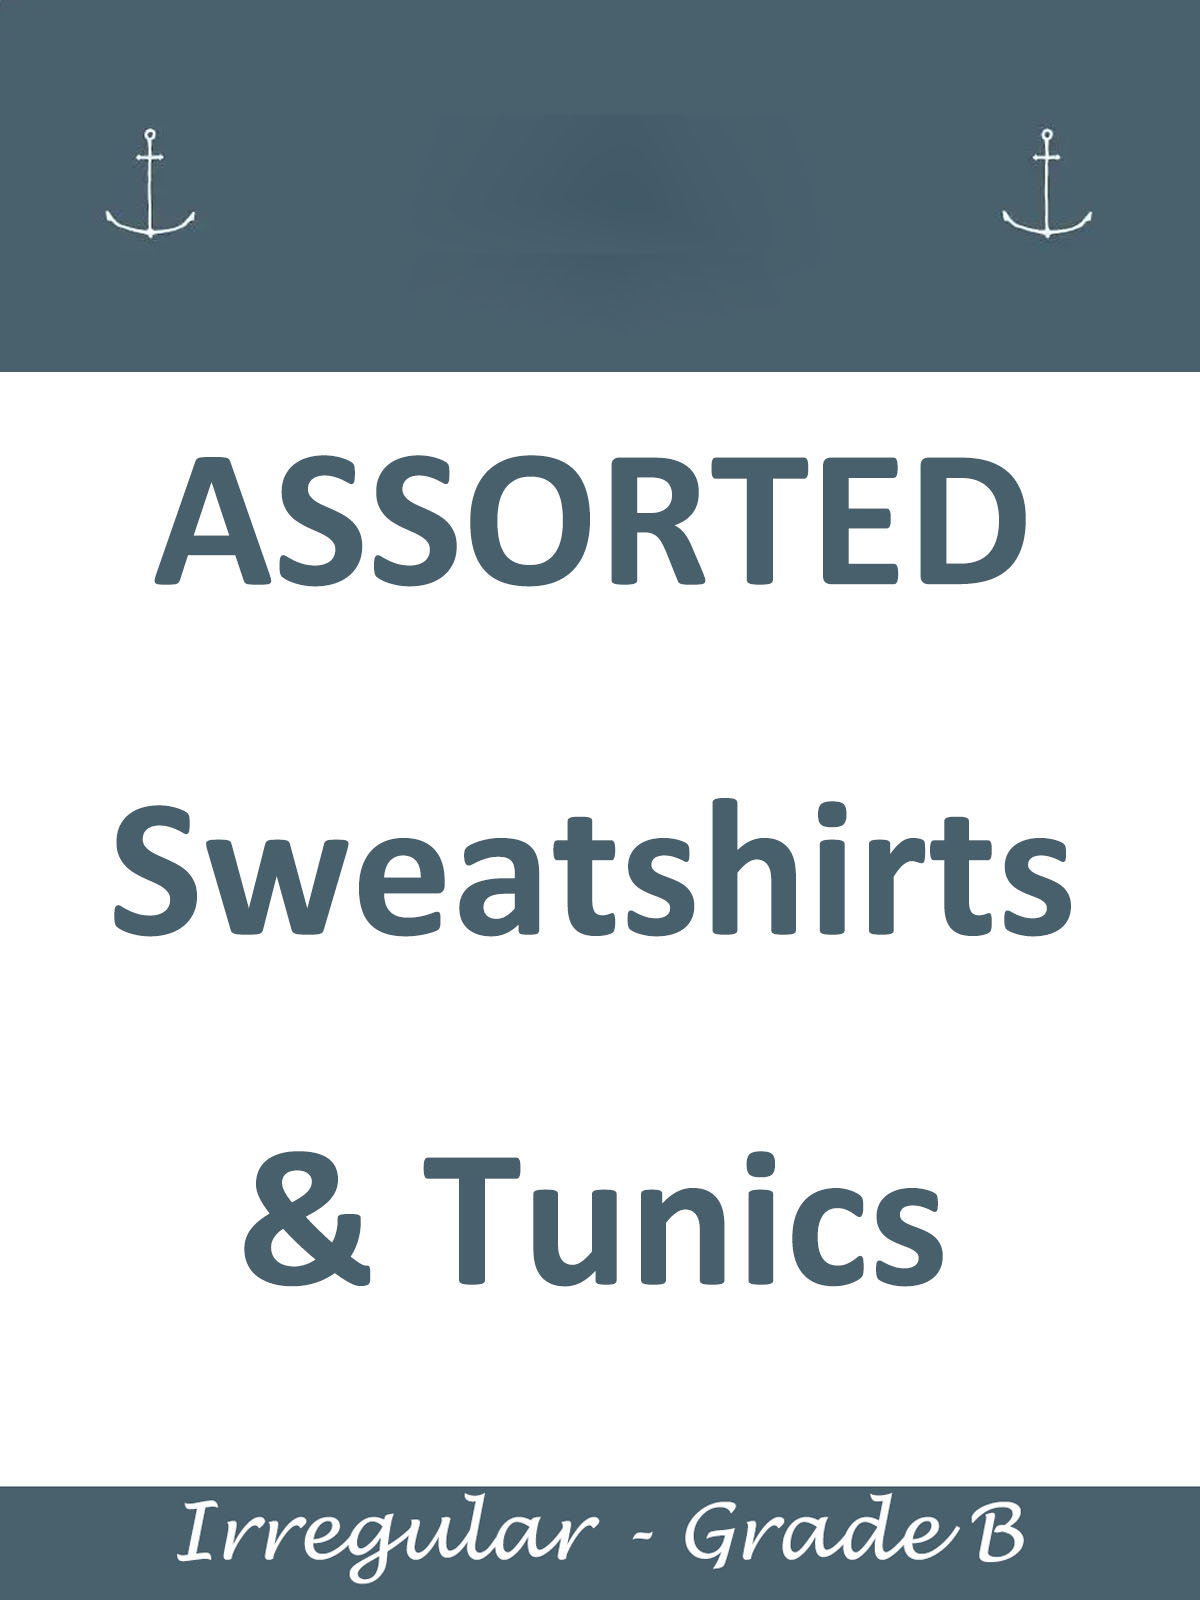 IRREGULAR -  ASSORTED Sweatshirts & Tunics - Size 10 to 26/28